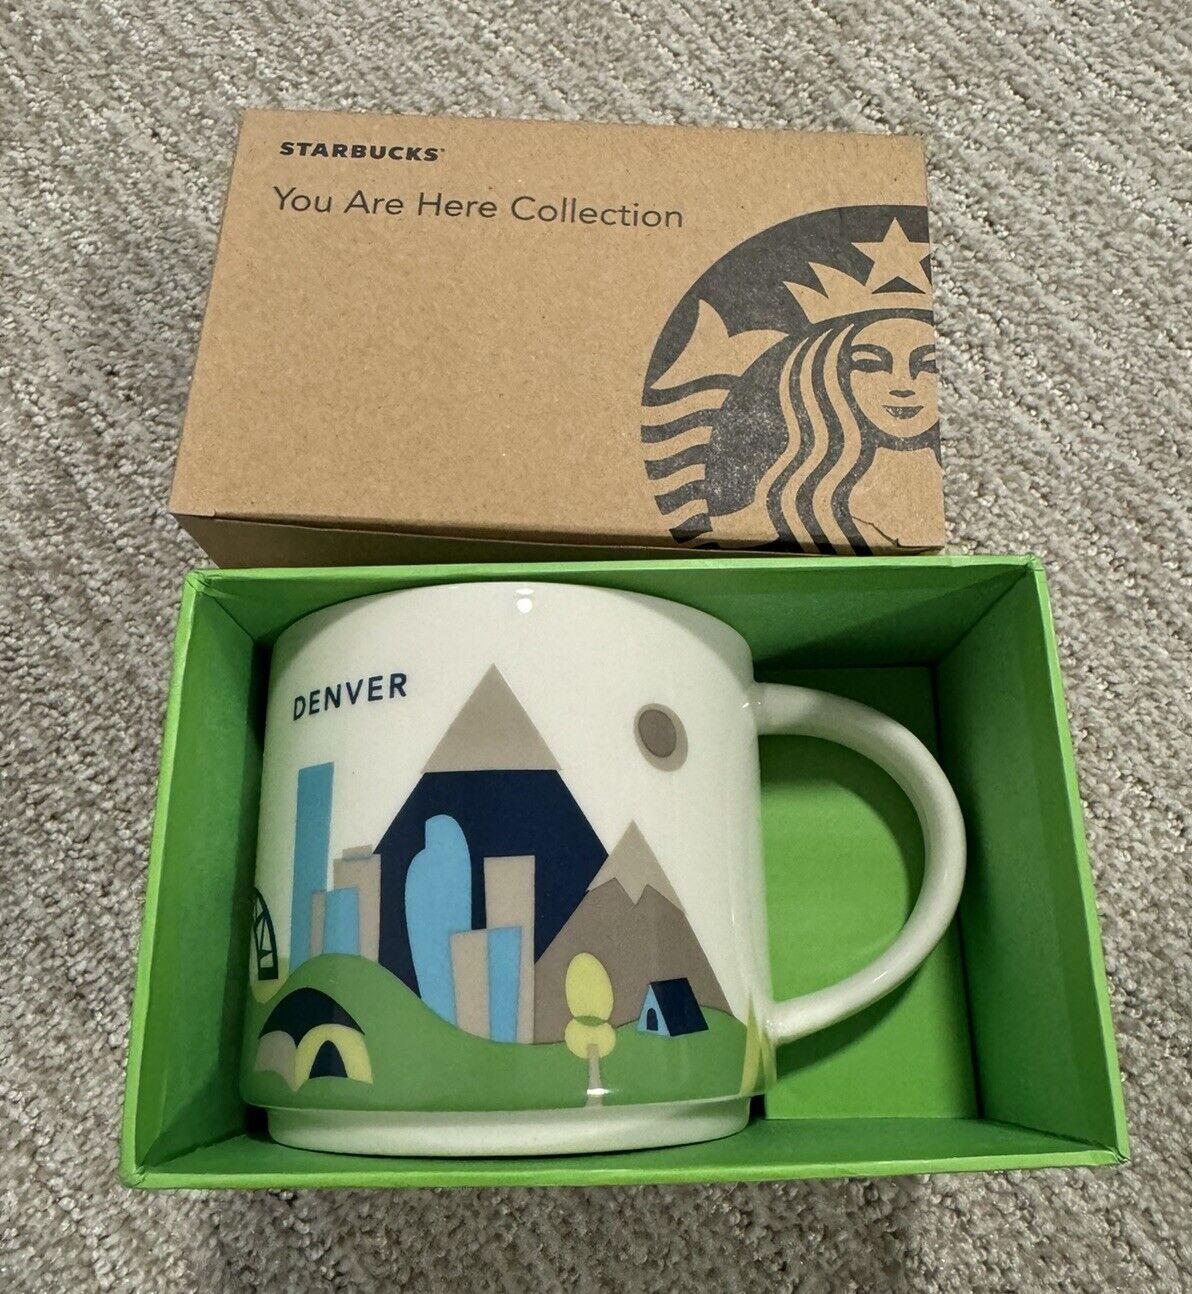 Starbucks YAH Denver Coffee Mug Cup 14oz. - You are Here - Brand New